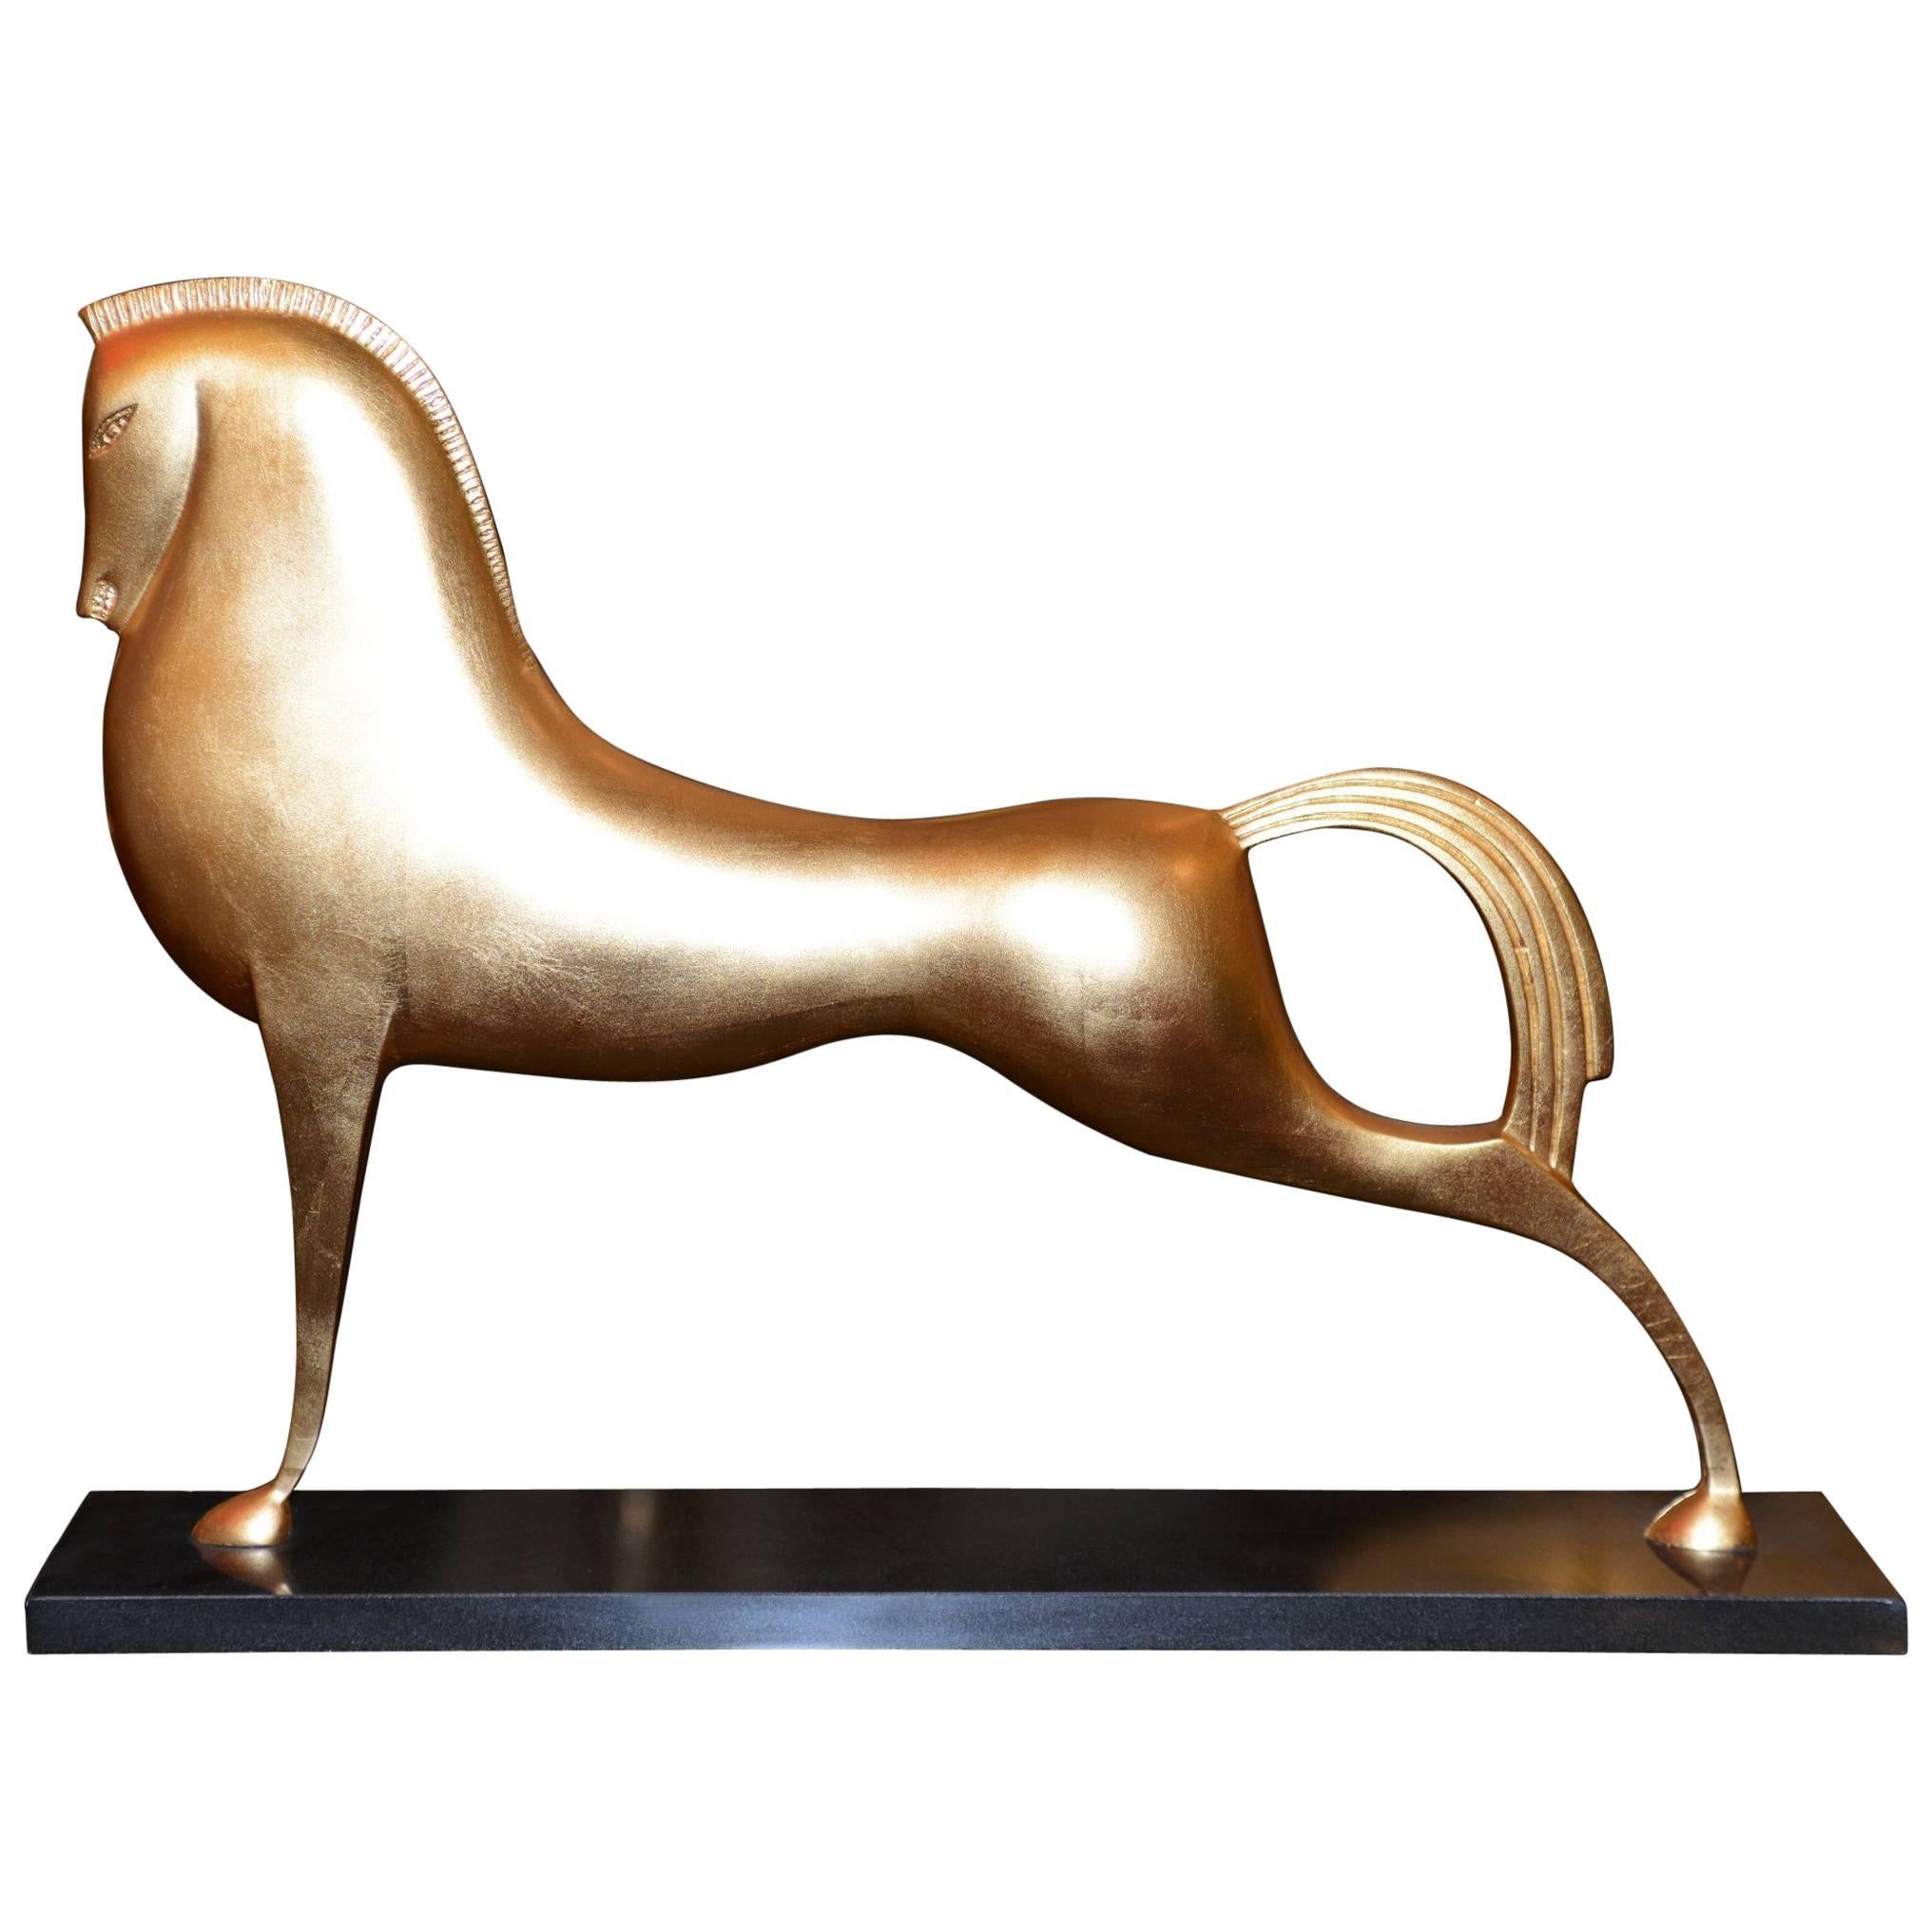 Greek Horse Sculpture in Solid Bronze in Gold Leaf Finish